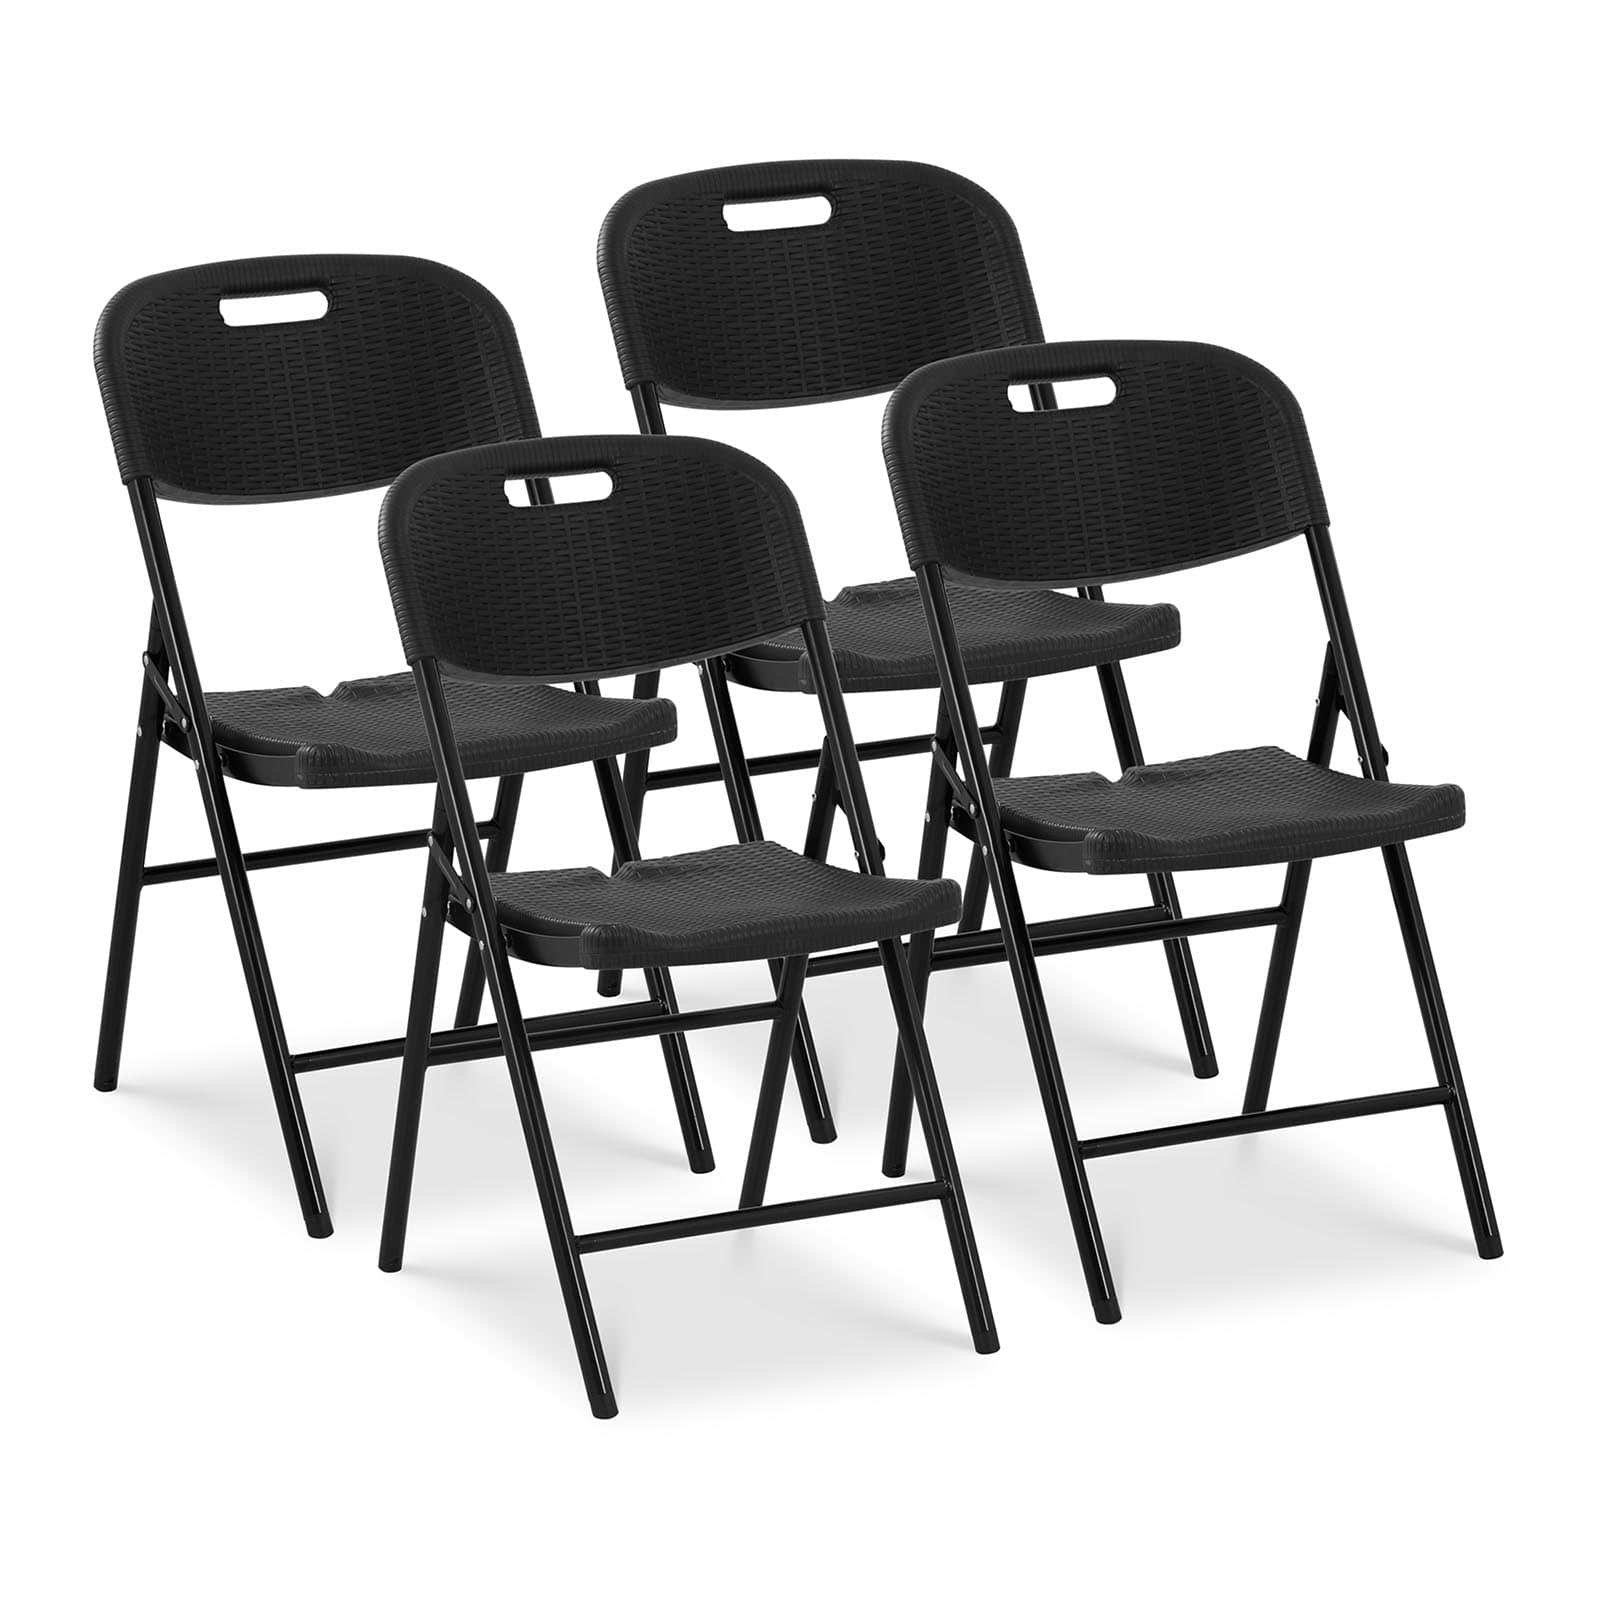 Sitzposition 36 – x cm Stuhl Sitzfläche Faltstuhl klappbar Polyethylen, Faltstuhl von 180 Royal Klappstühle 52 komfortable bietet Catering große bequem Stahl kg 4er-Set